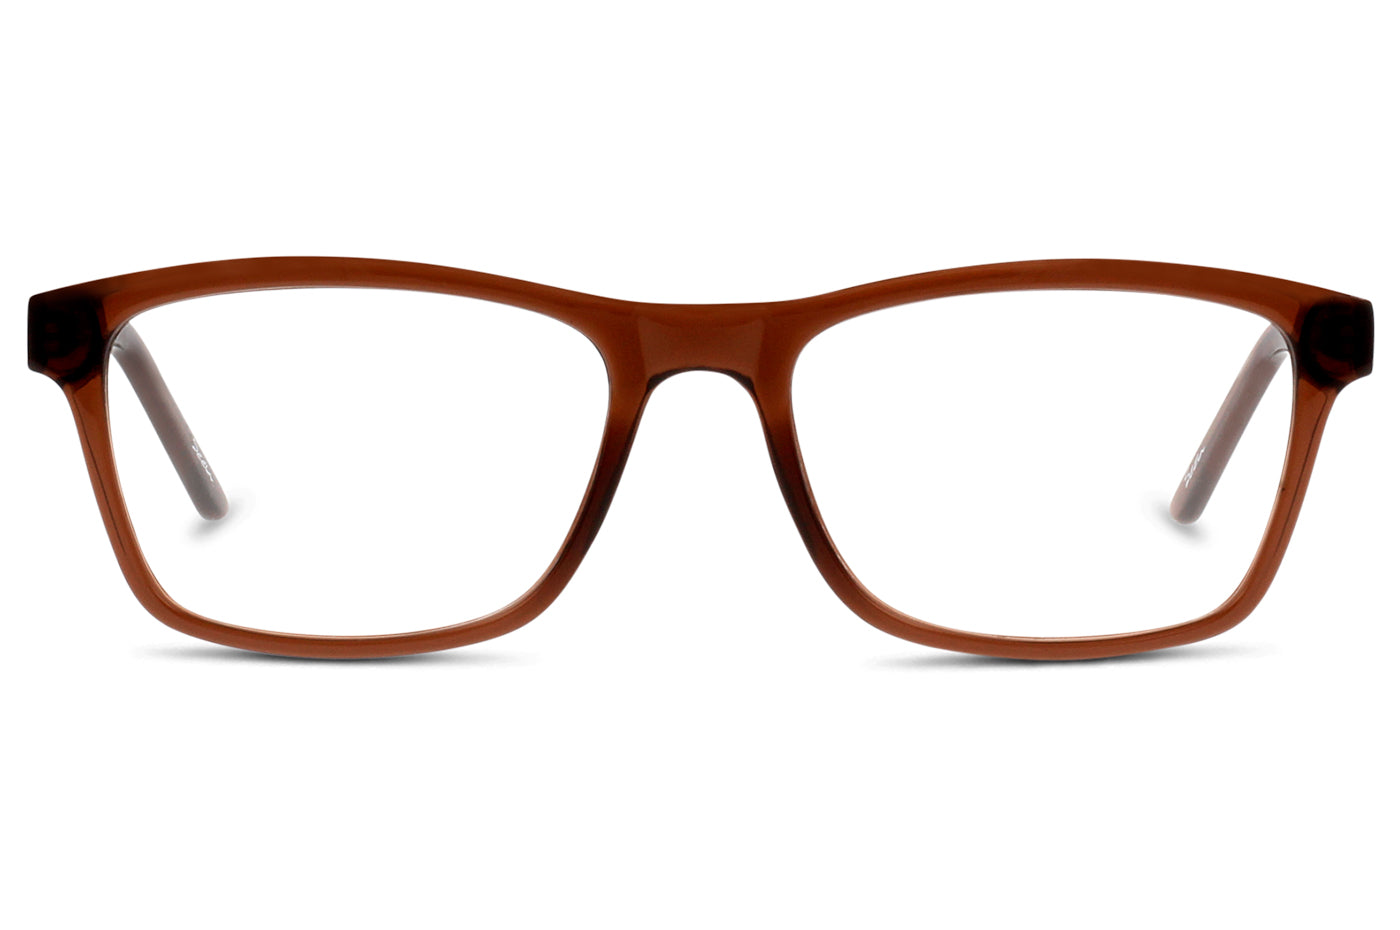 Vista-1 - Gafas oftalmicas Seen BP_SNKM04 Hombre Color Café / Incluye lentes filtro luz azul violeta